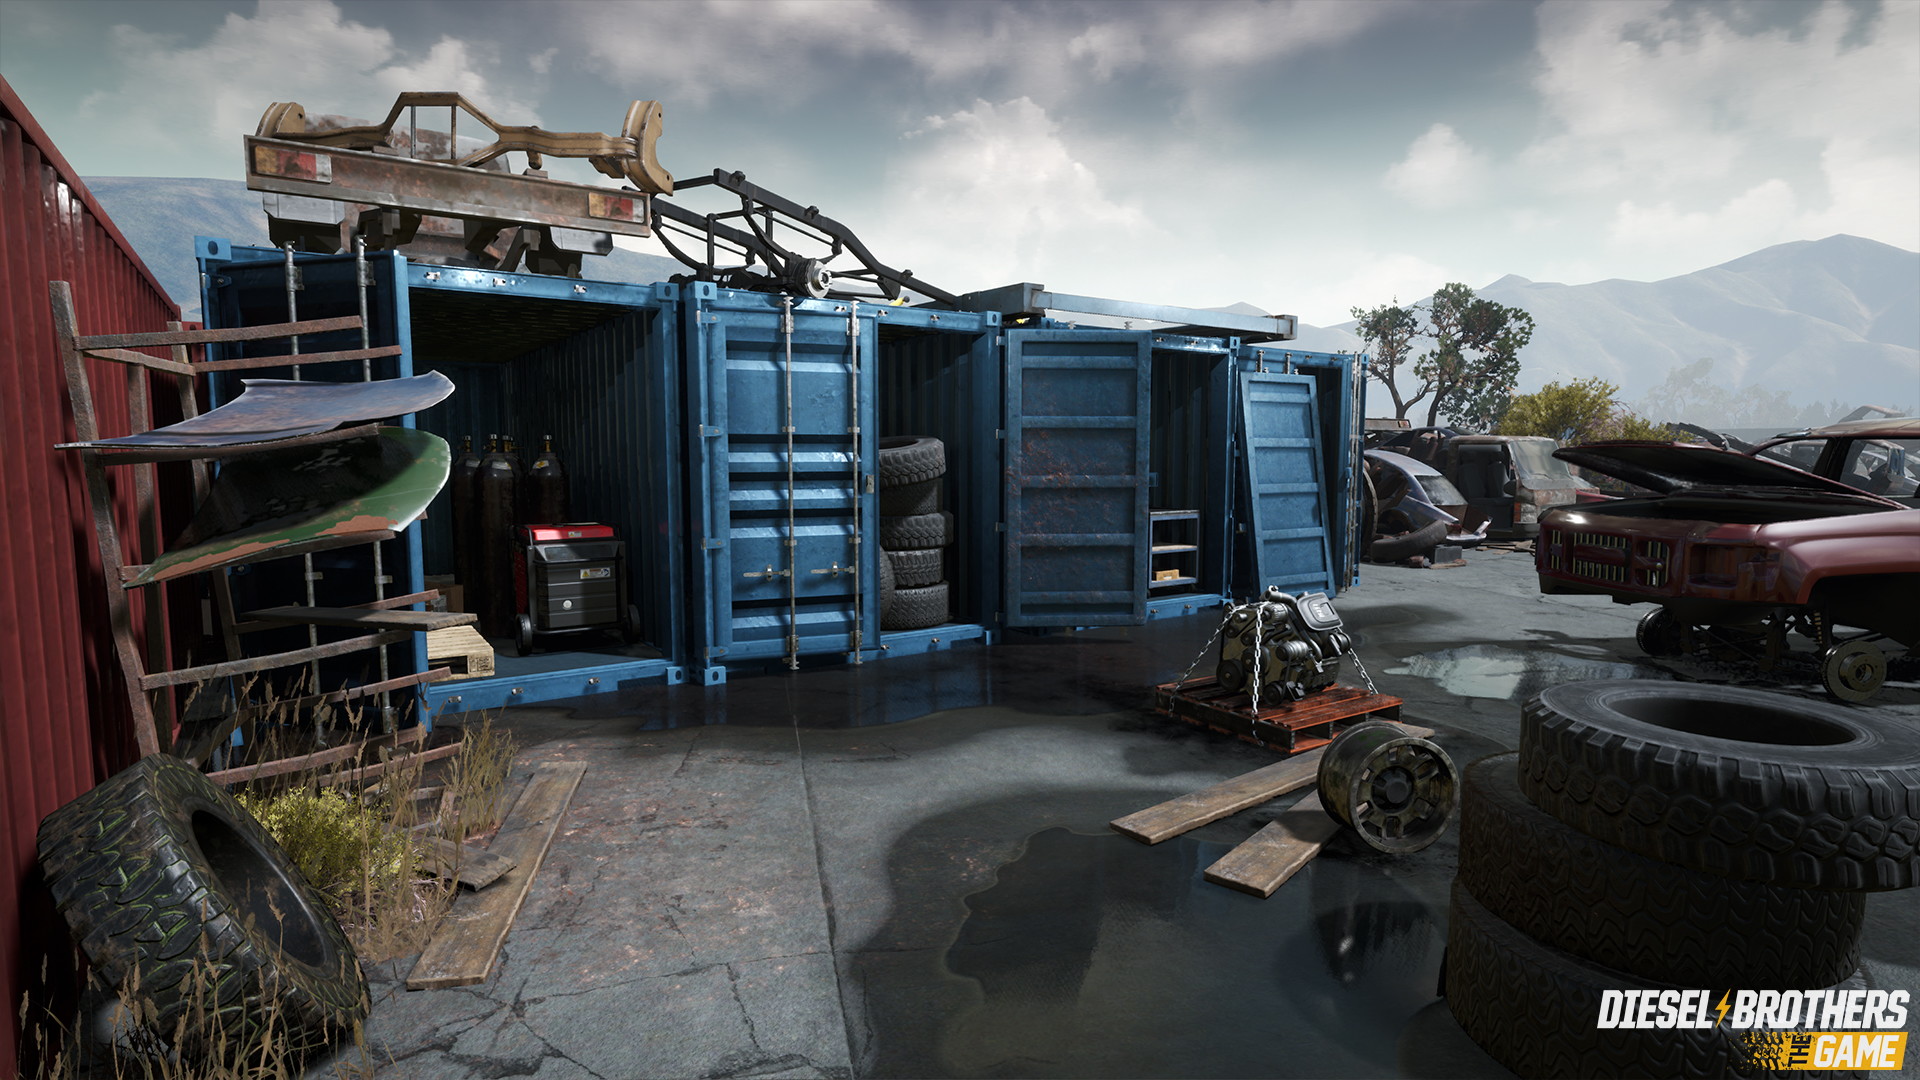 Diesel Brothers: Truck Building Simulator - screenshot 4